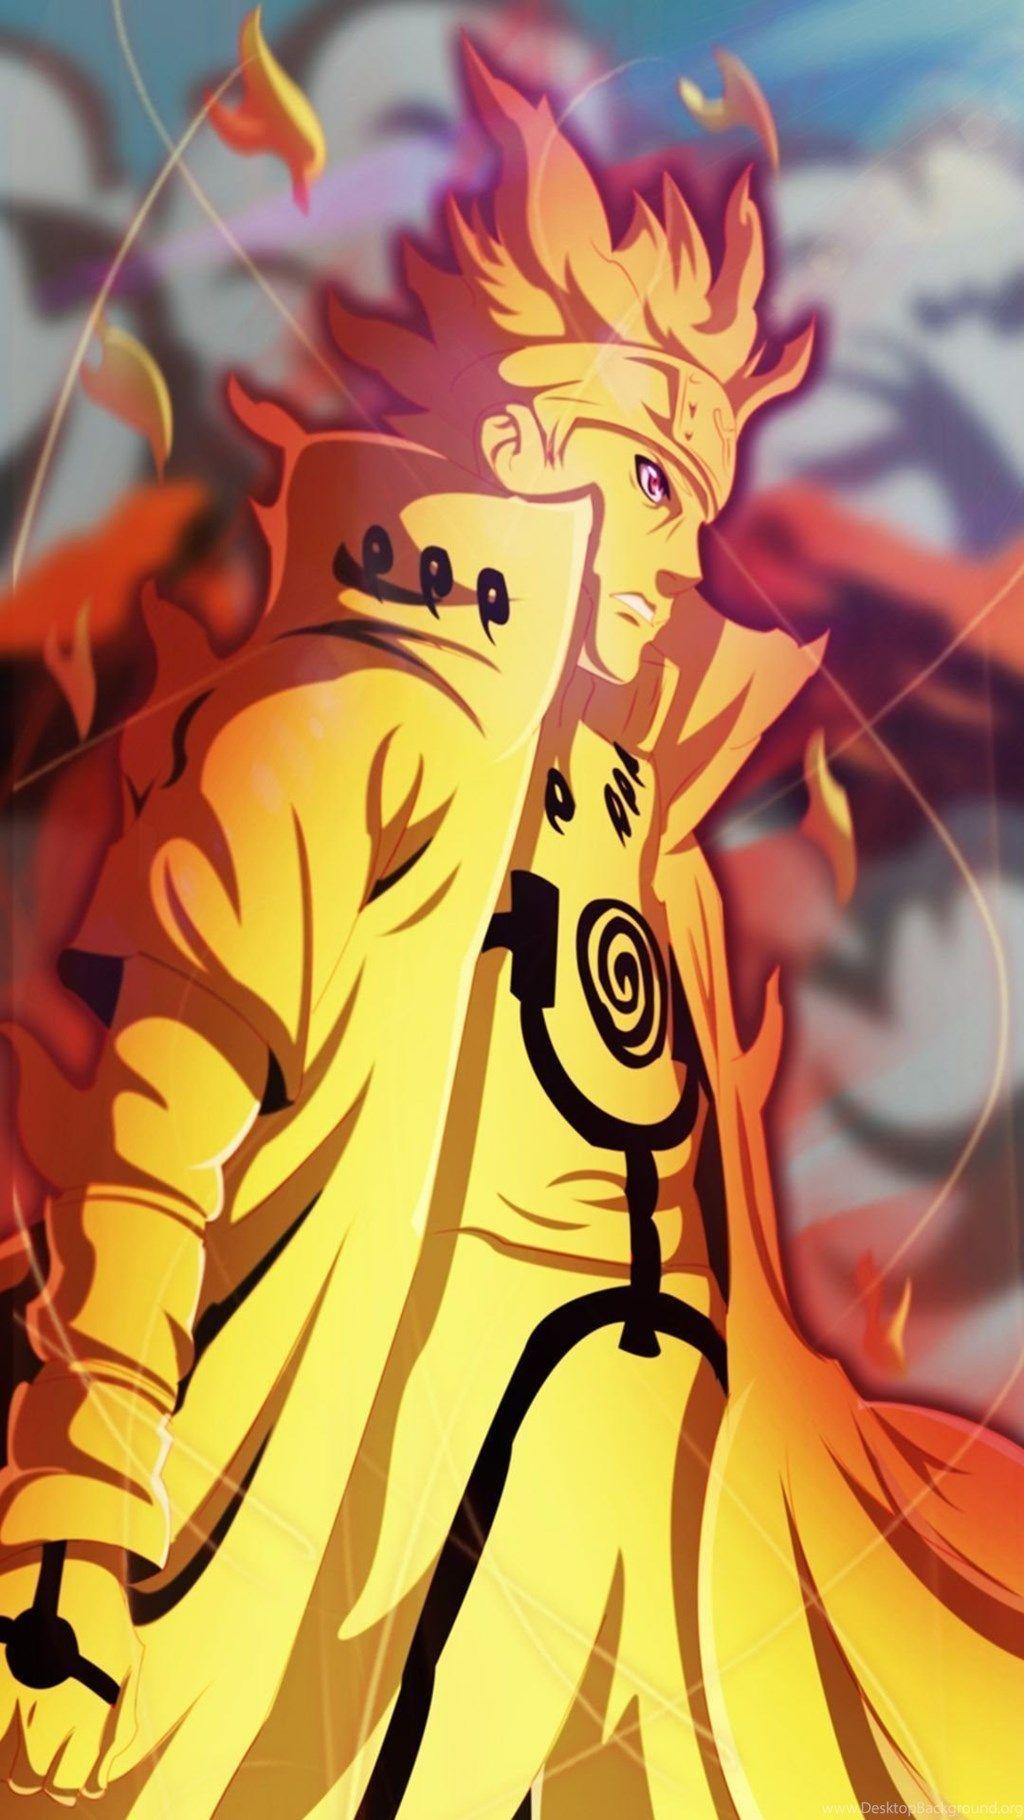 Naruto wallpapers on X: Aquele wallpaper super fofo de Naruto